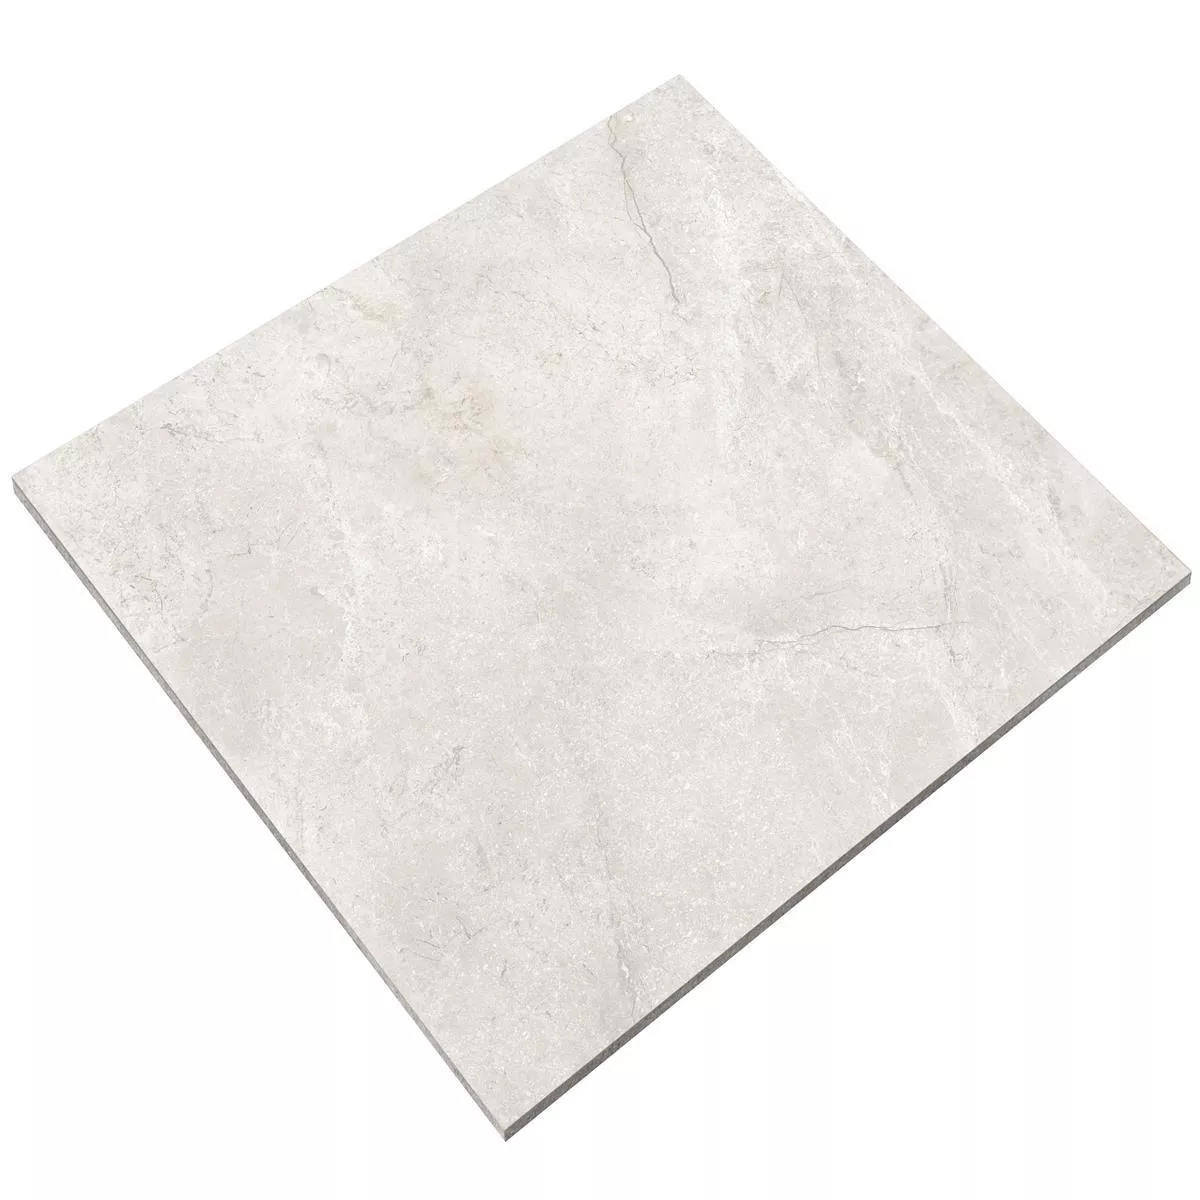 Sample Floor Tiles Pangea Marble Optic Mat Ivory 60x60cm